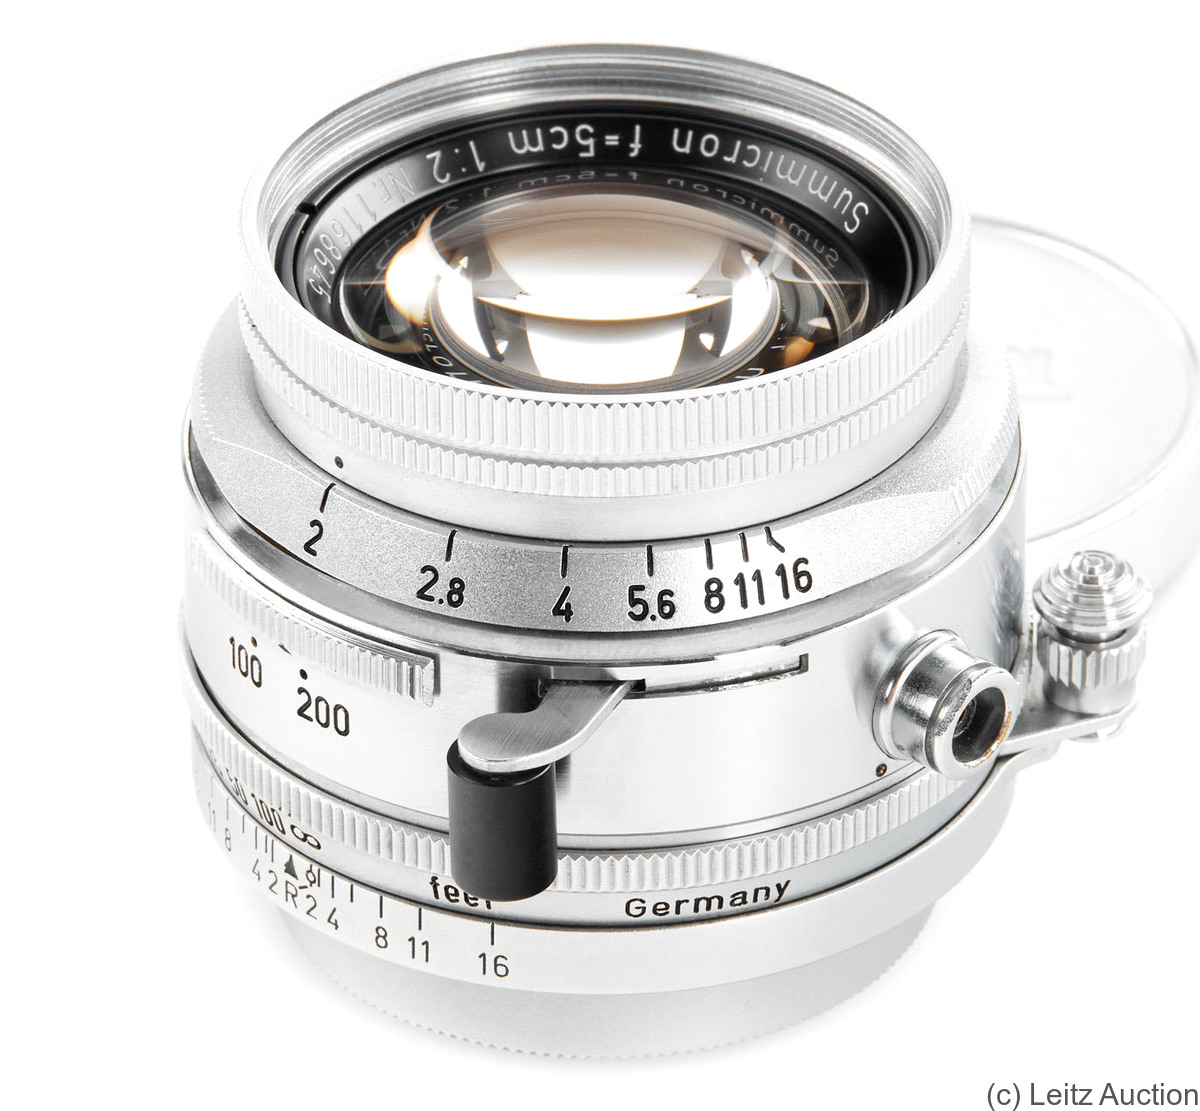 Leitz: 50mm (5cm) f2 Summicron (SM, Compur) camera